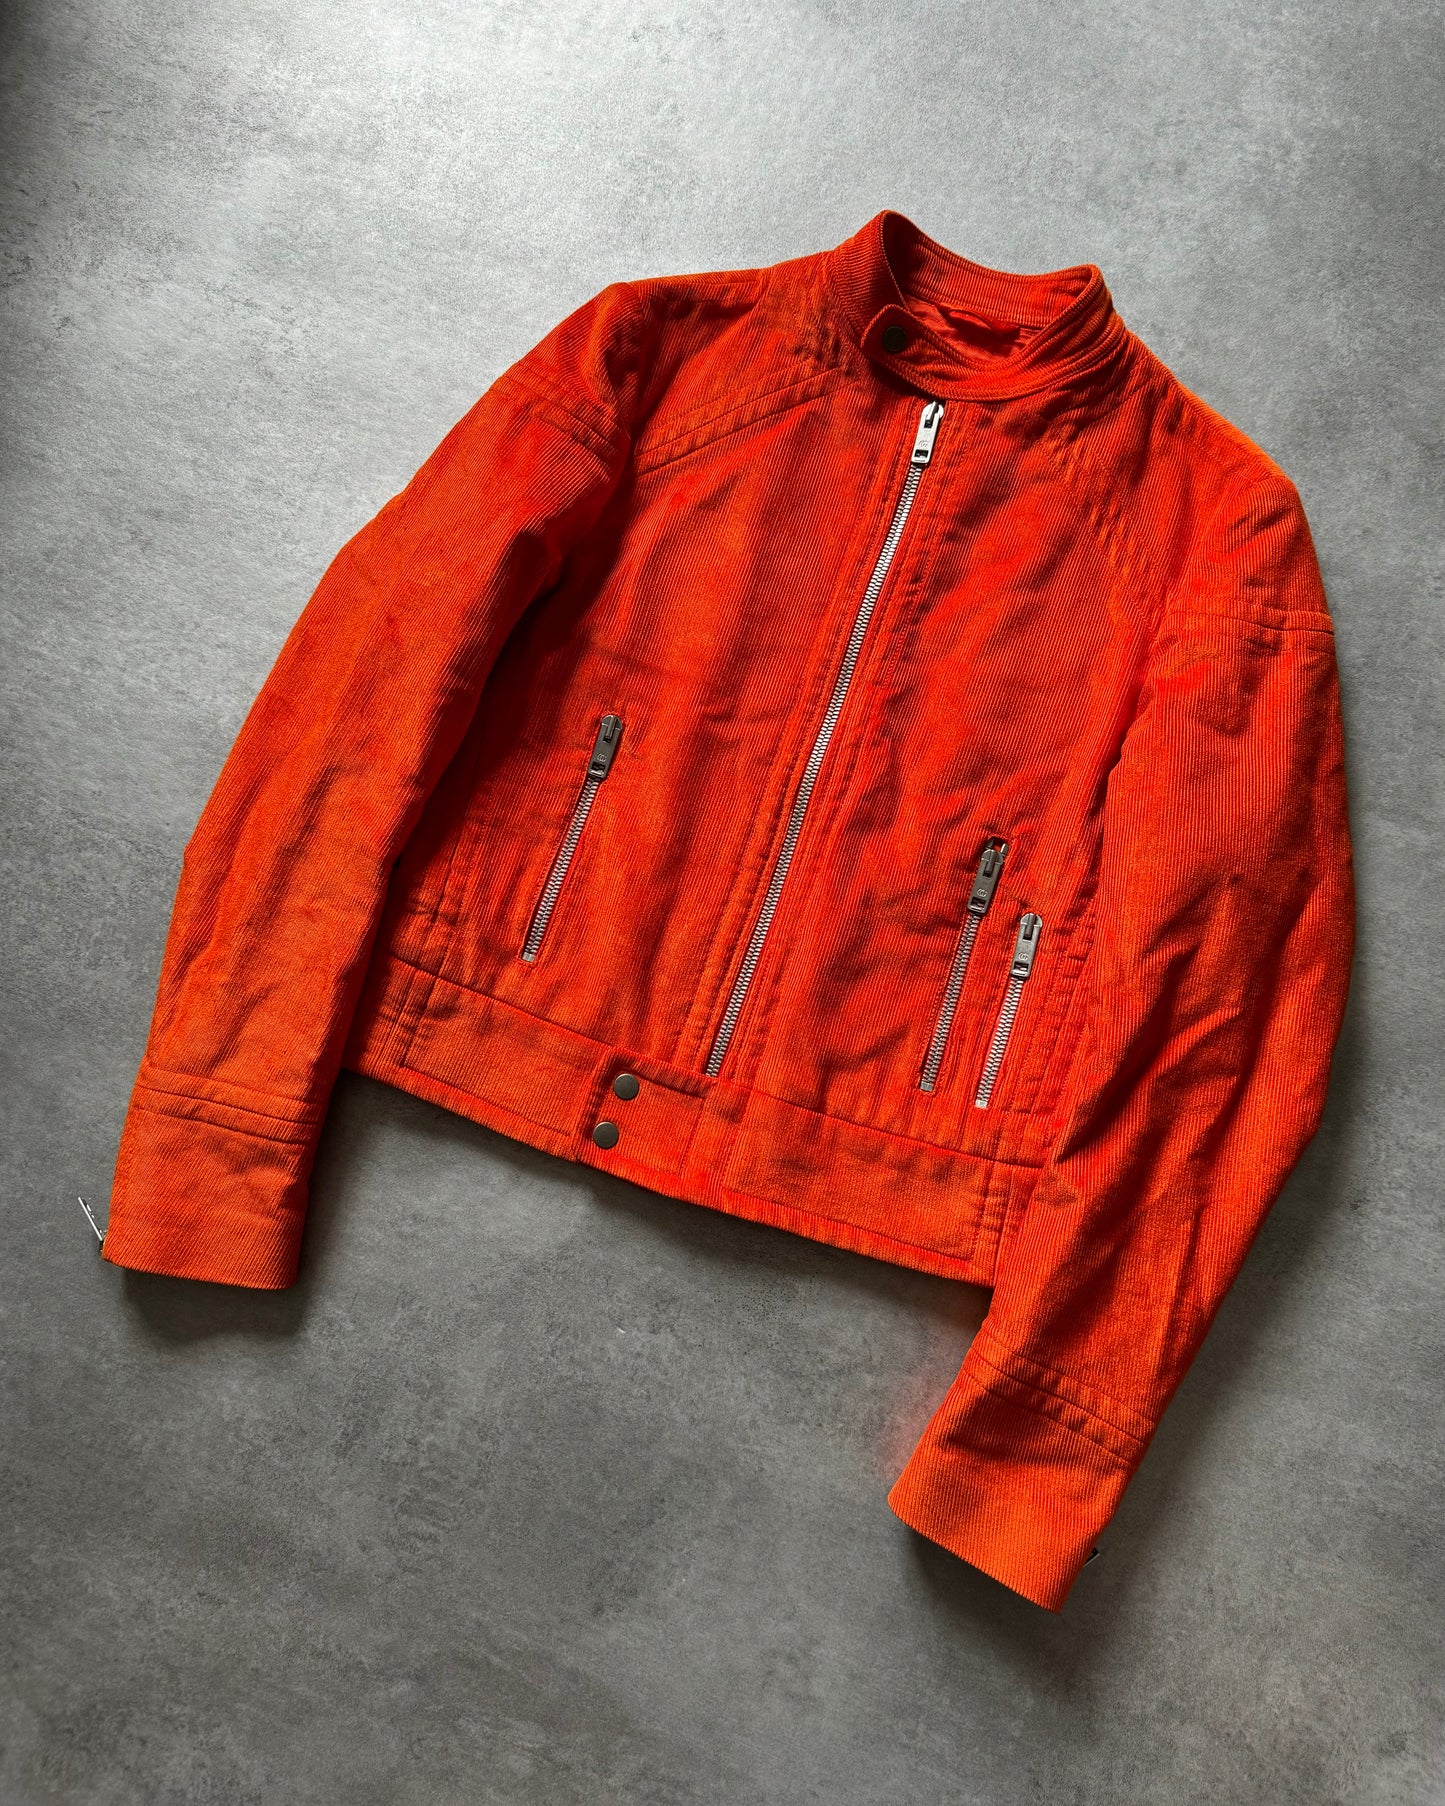 FW1999 Gucci Orange Biker Jacket by Tom Ford (S) - 4